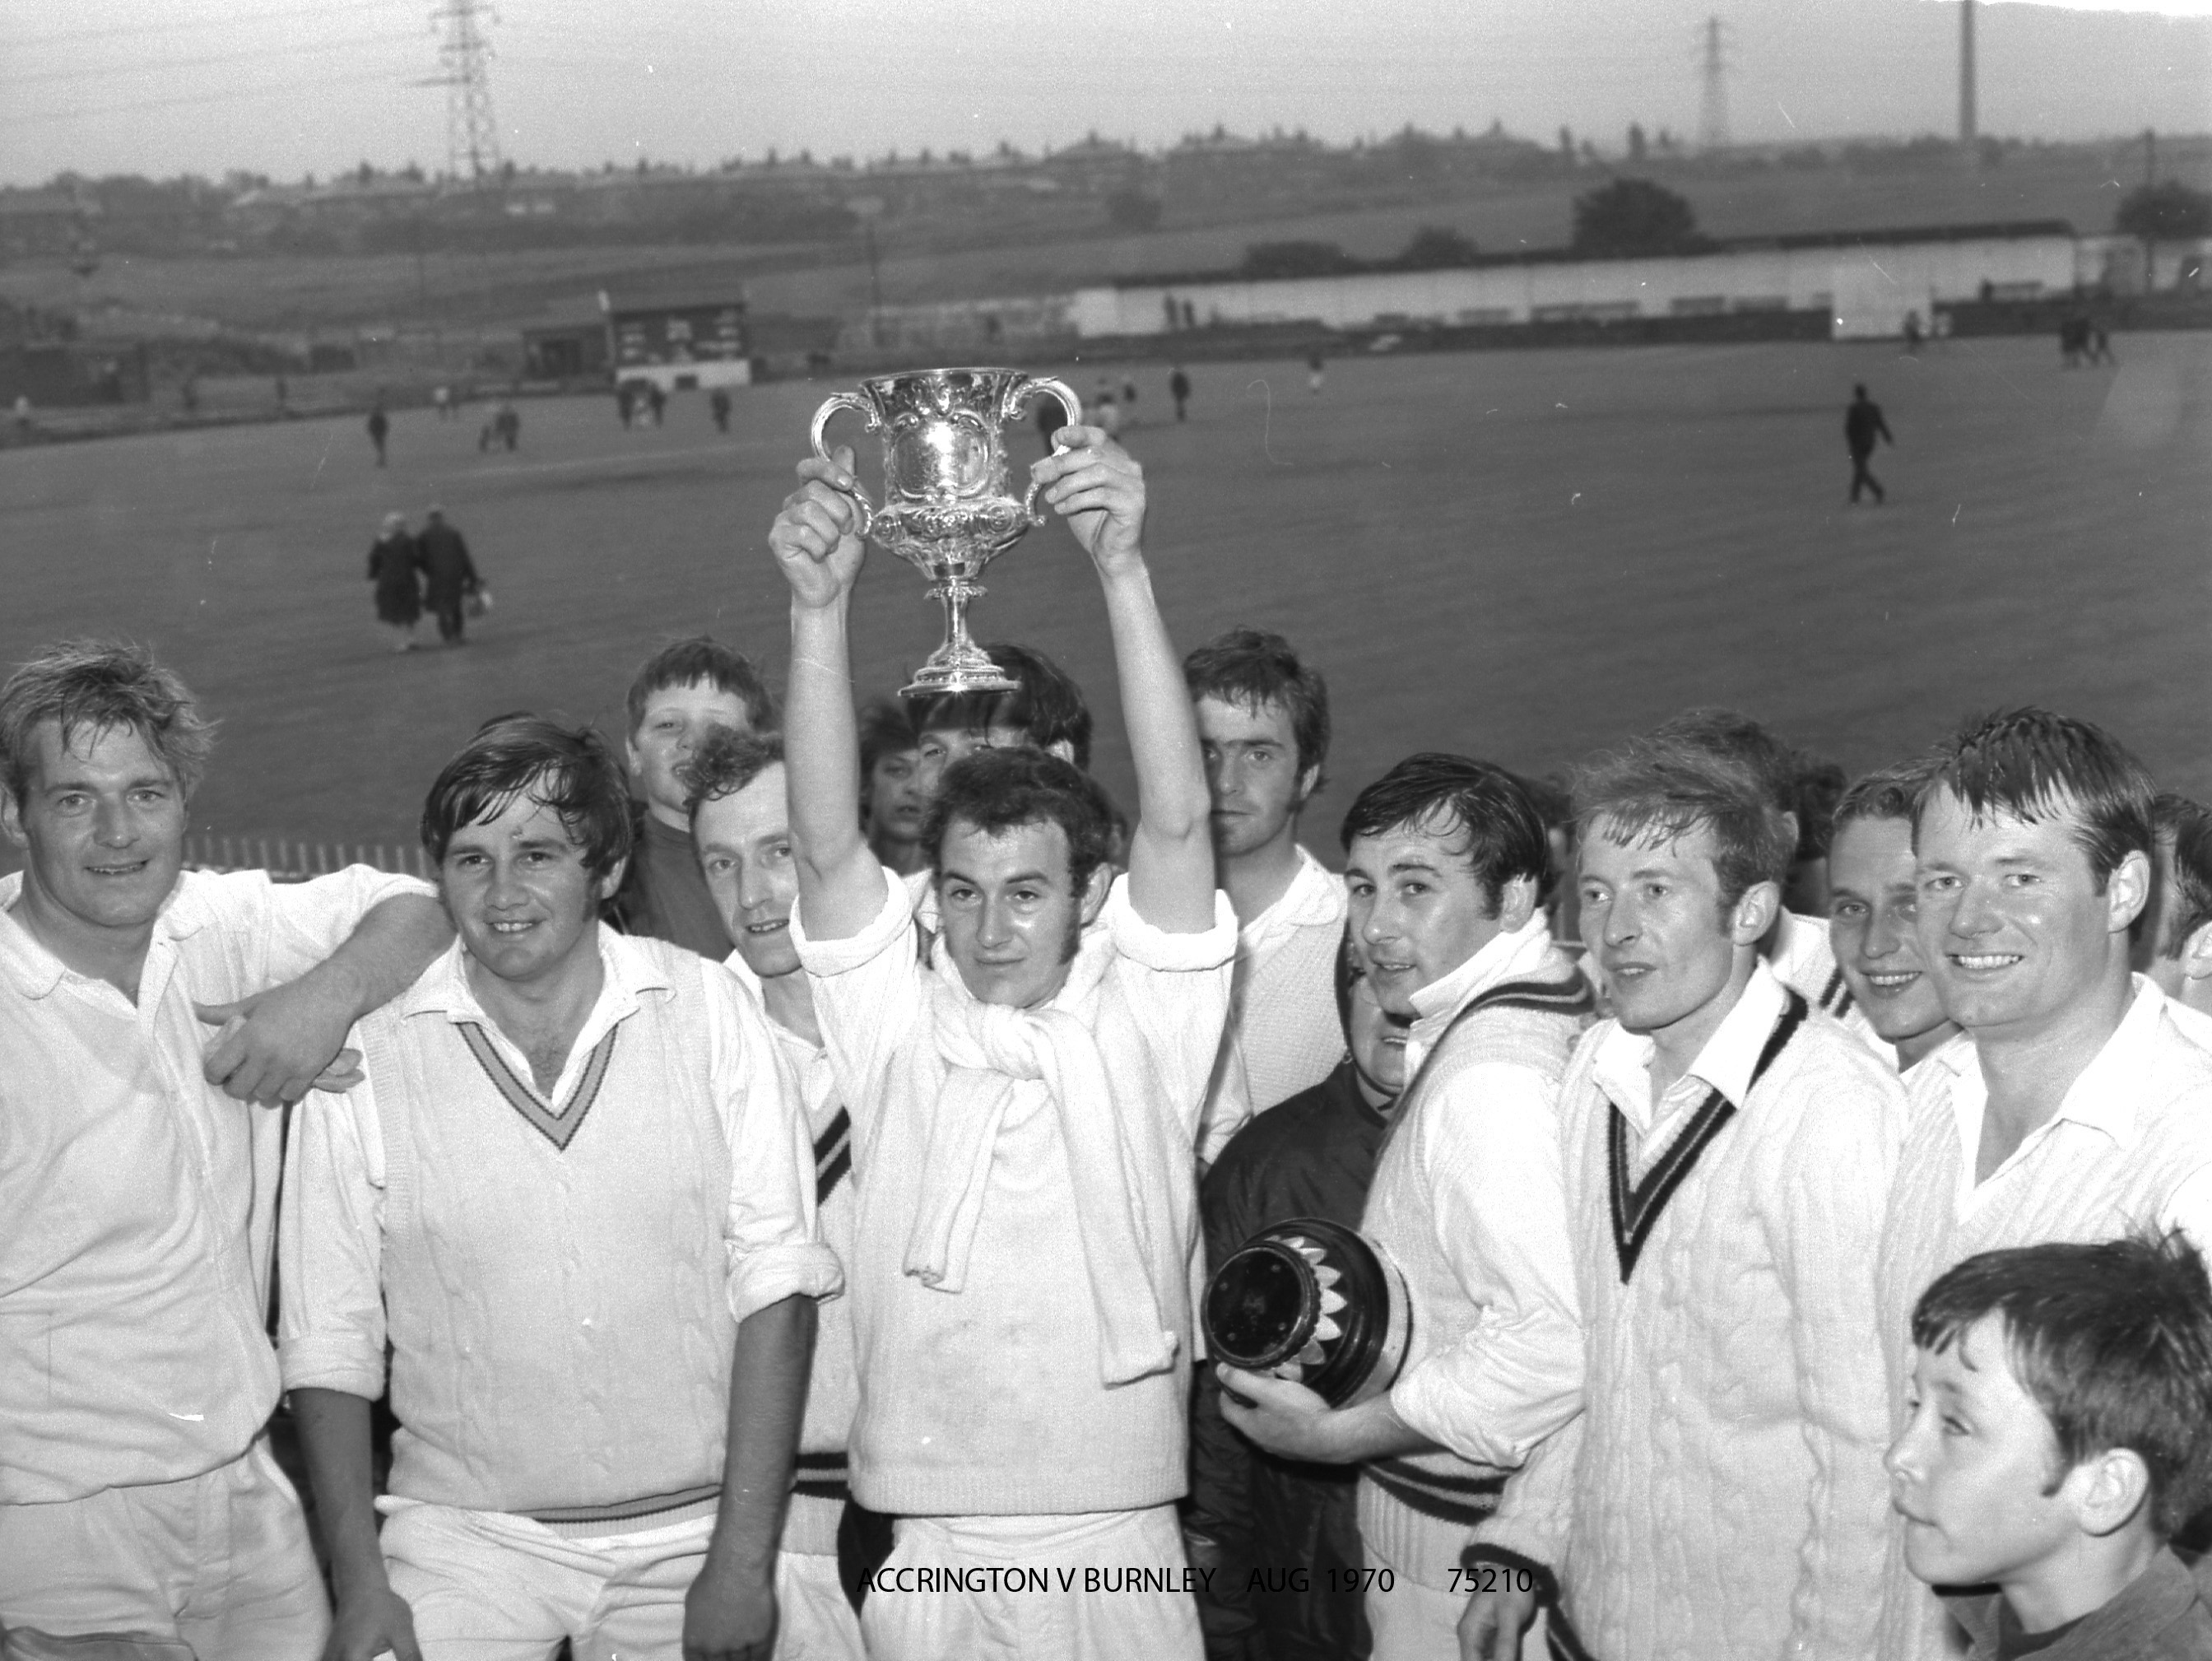 Accrington 1970 Worsley Cup winners